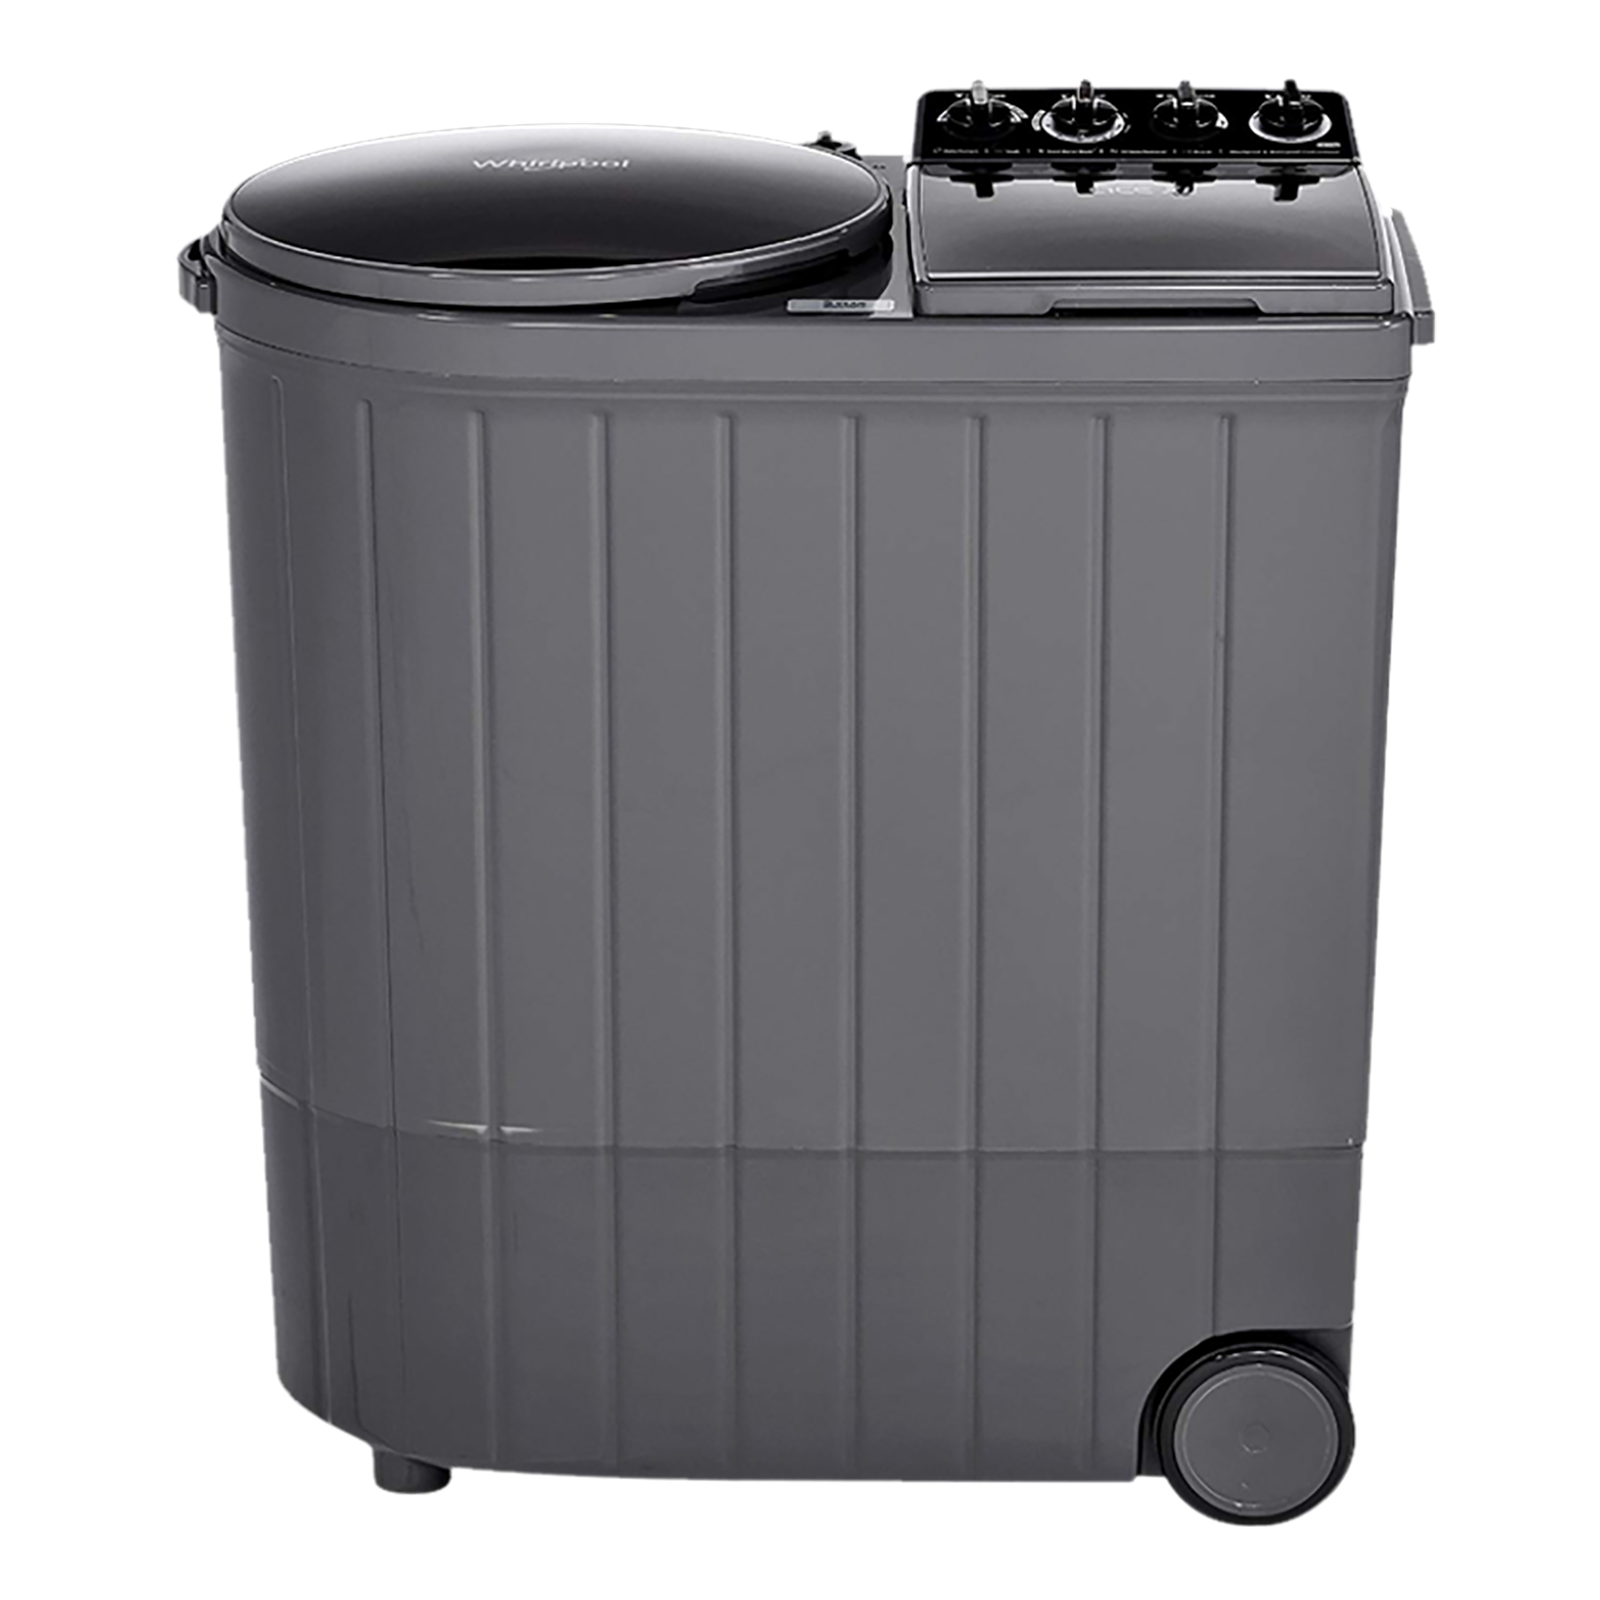 Whirlpool 10.5 Kg 5 Star Top Loading Semi Automatic Washing Machine (Ace XL, Grey)